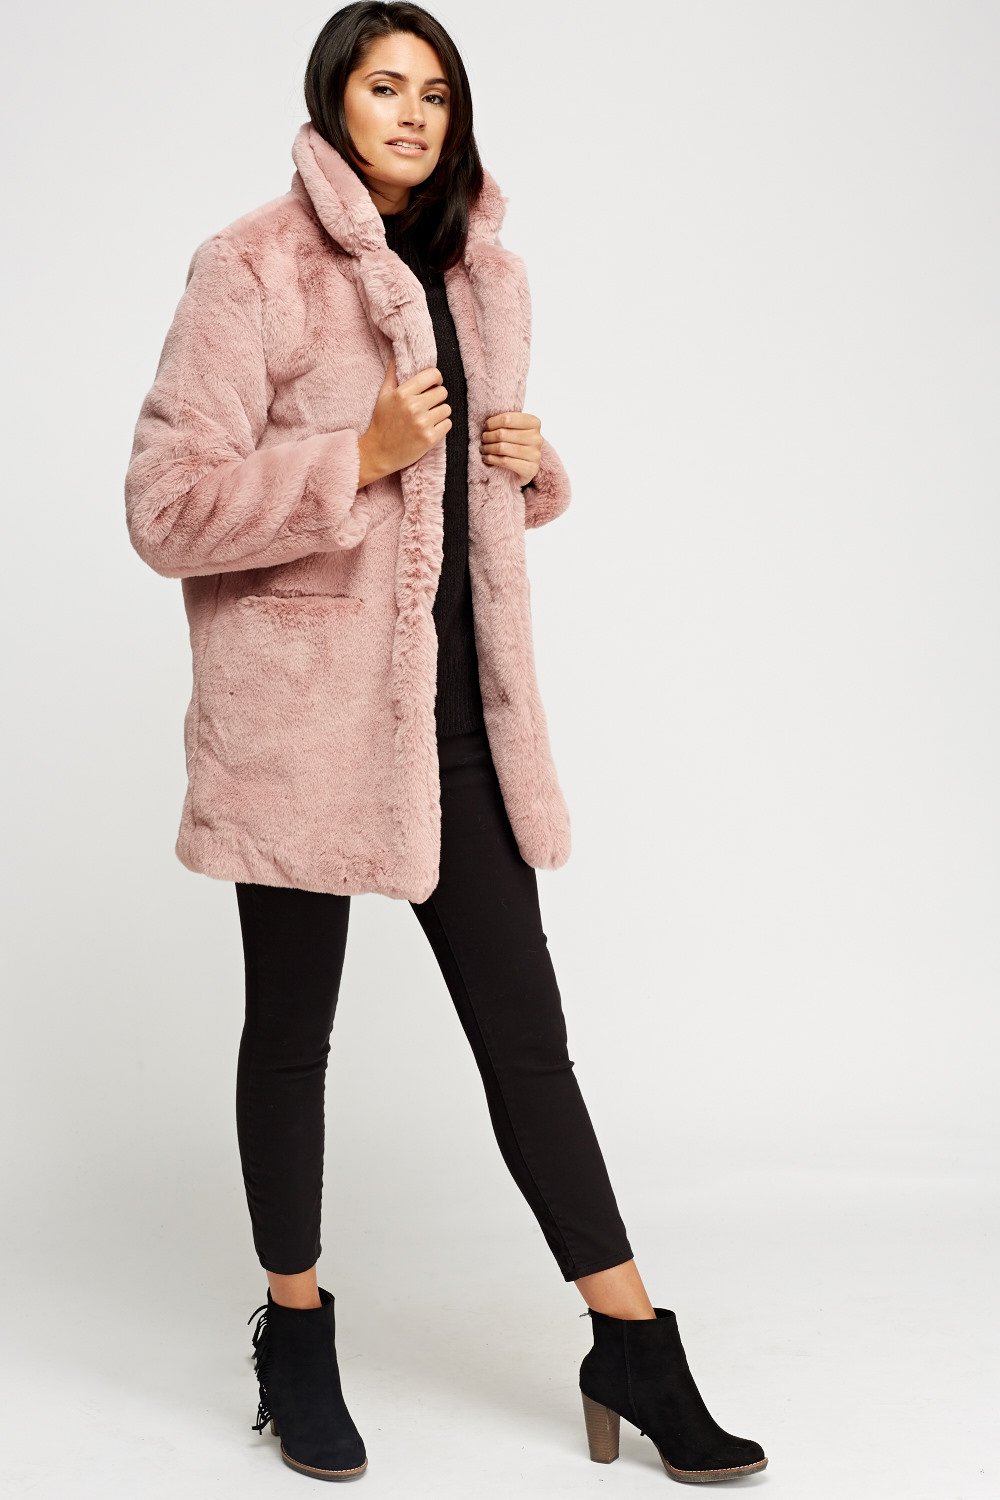 K.ZELL Dusty Pink Teddy Bear Faux Fur Coat - Limited edition | Discount ...